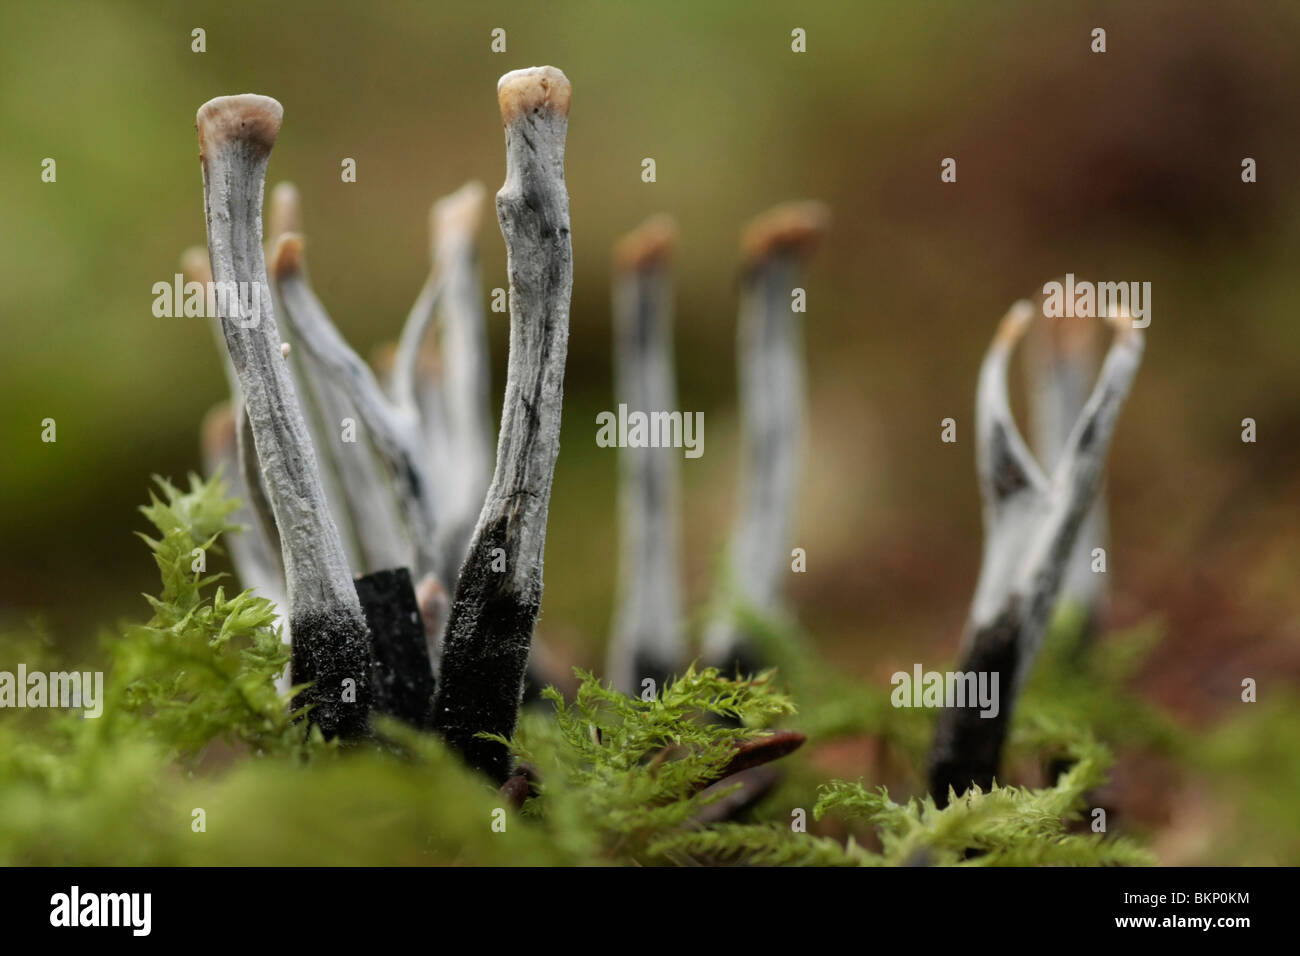 Groepje Geweizwammetjes op met mos begroeide bosbodem; Candlesnuff fungus Stock Photo